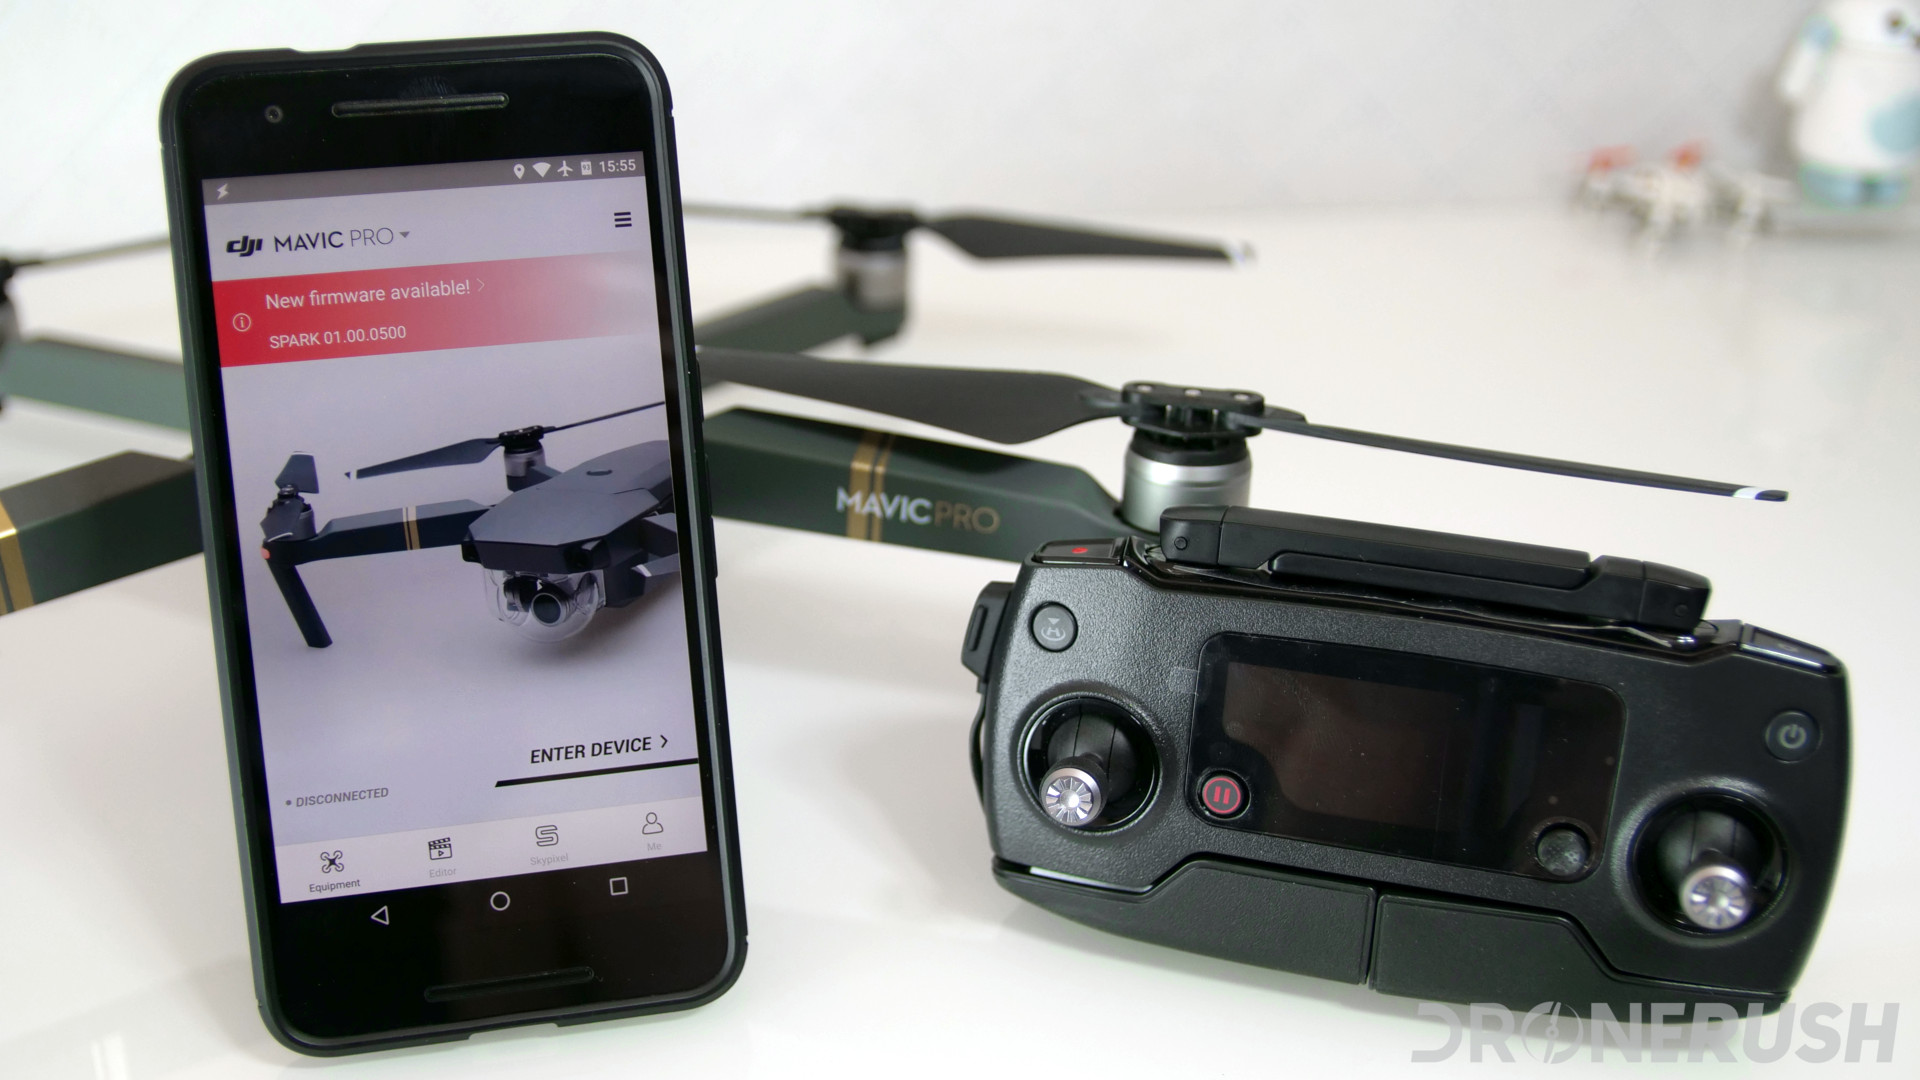 dronex pro iphone